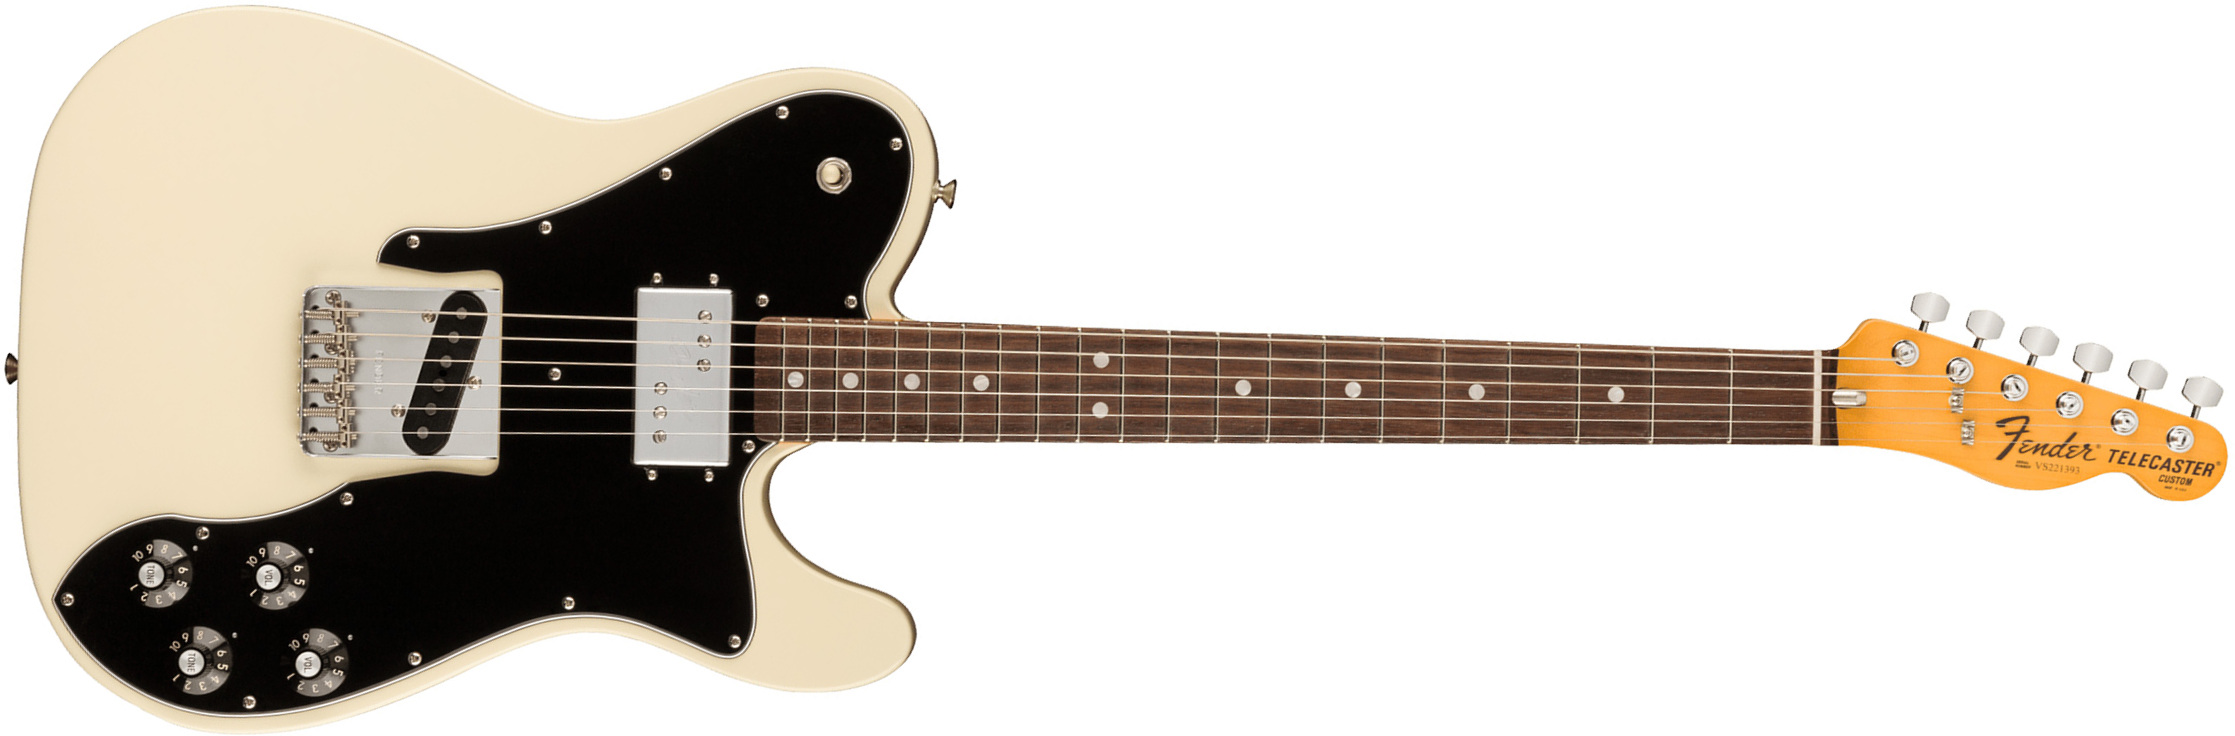 Fender Tele Custom 1977 American Vintage Ii Usa Sh Ht Rw - Olympic White - Televorm elektrische gitaar - Main picture